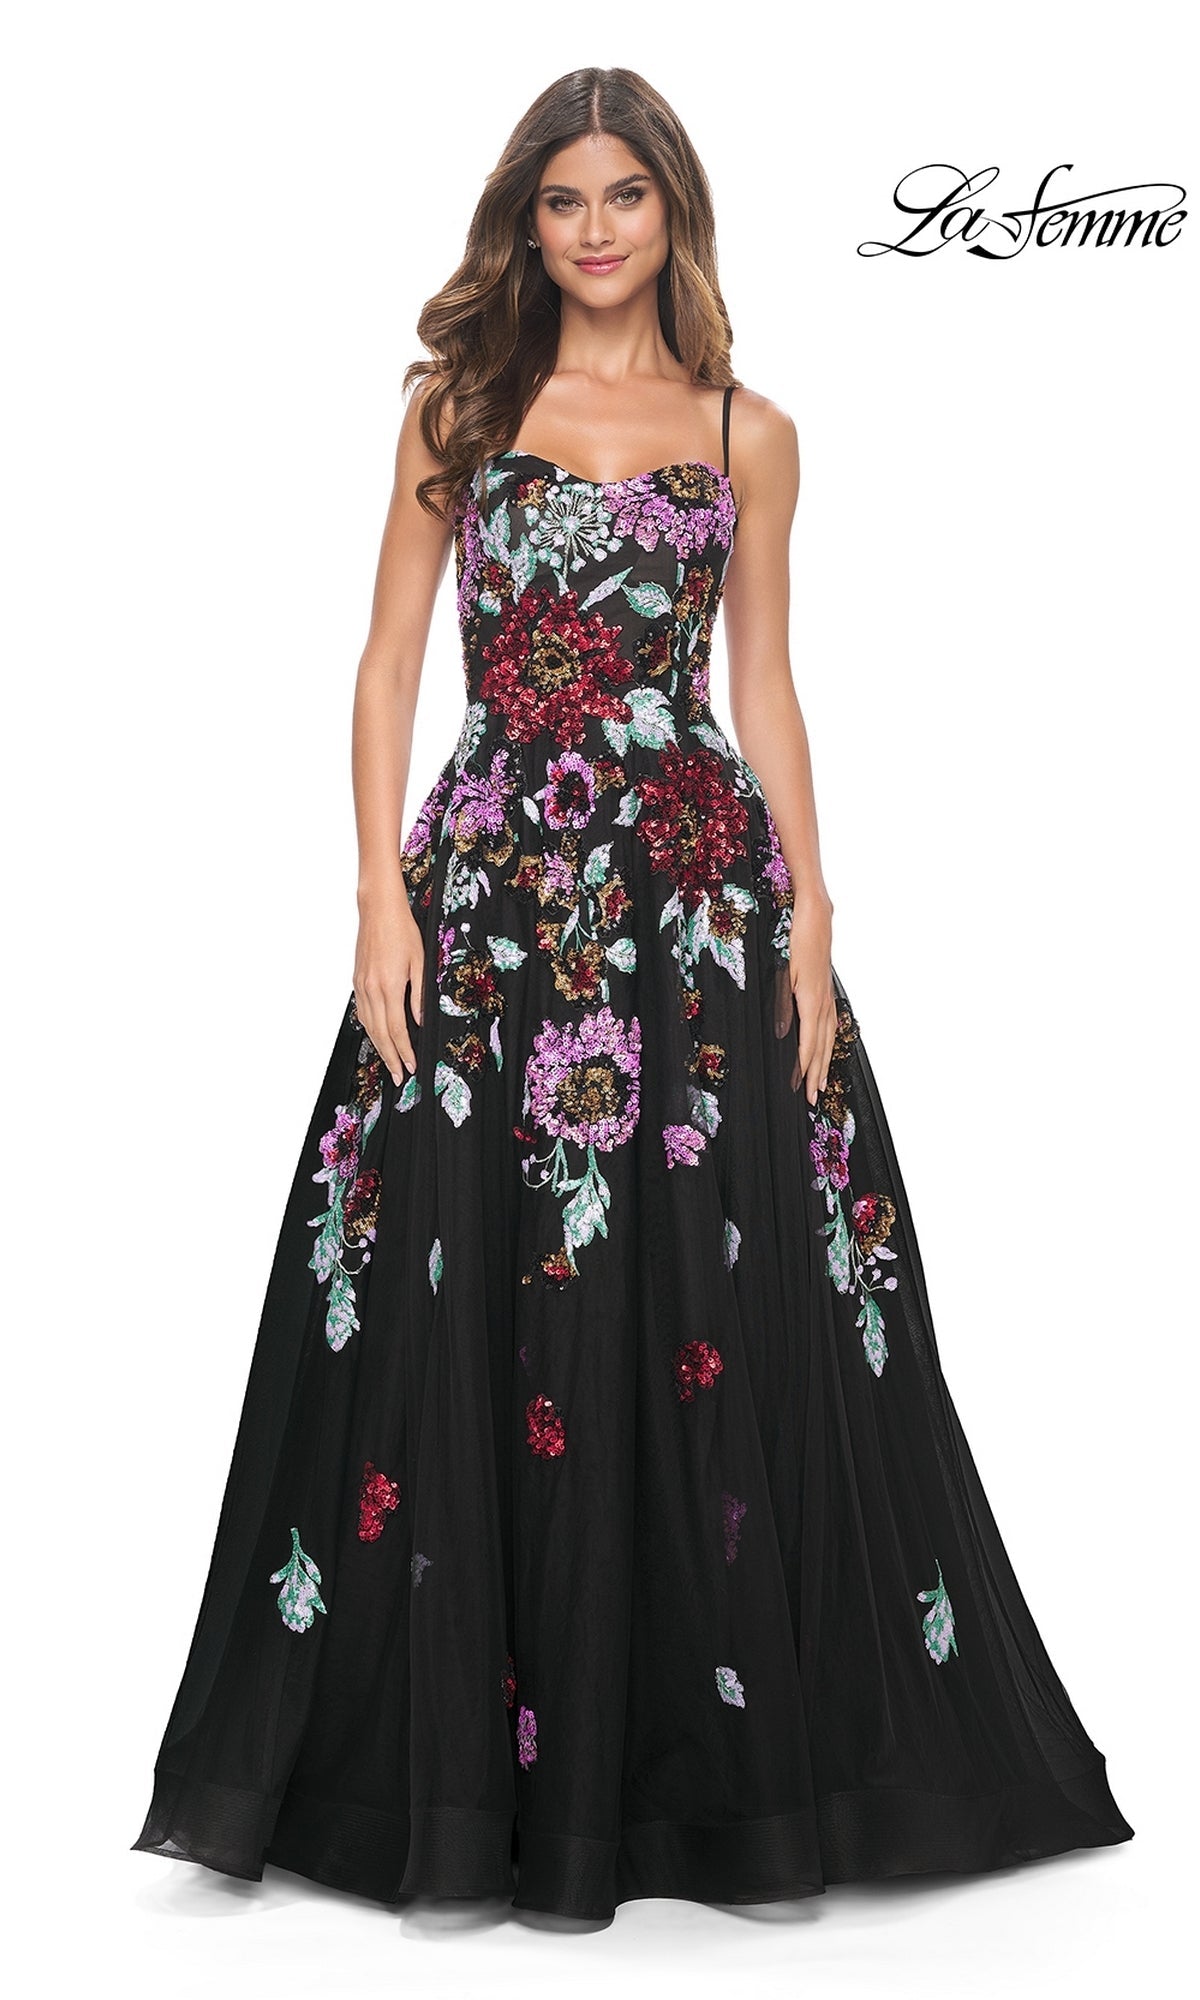  La Femme 32019 Formal Prom Dress